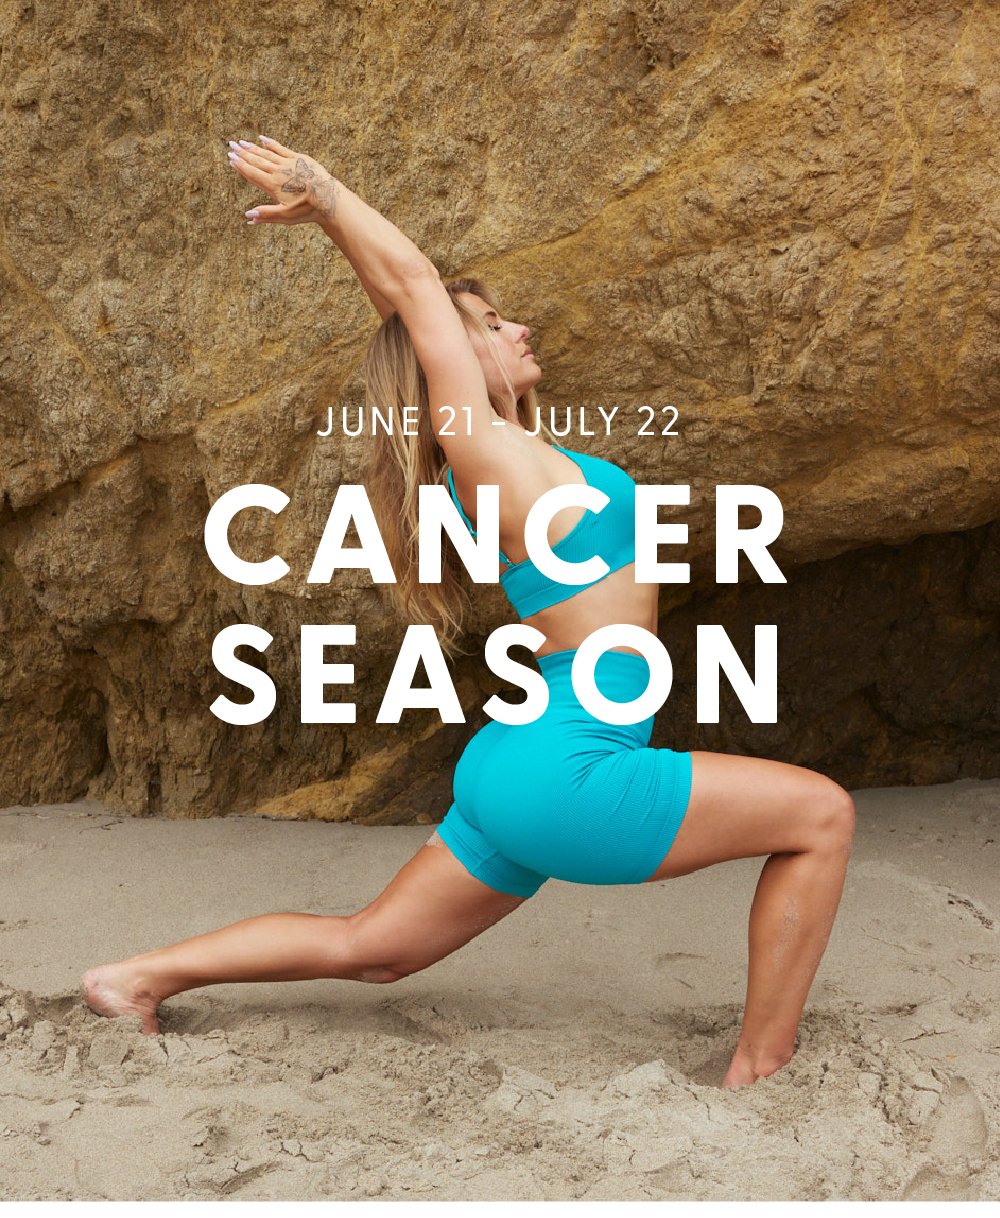 CANCER SEASON | JUNE 21 - JULY 22